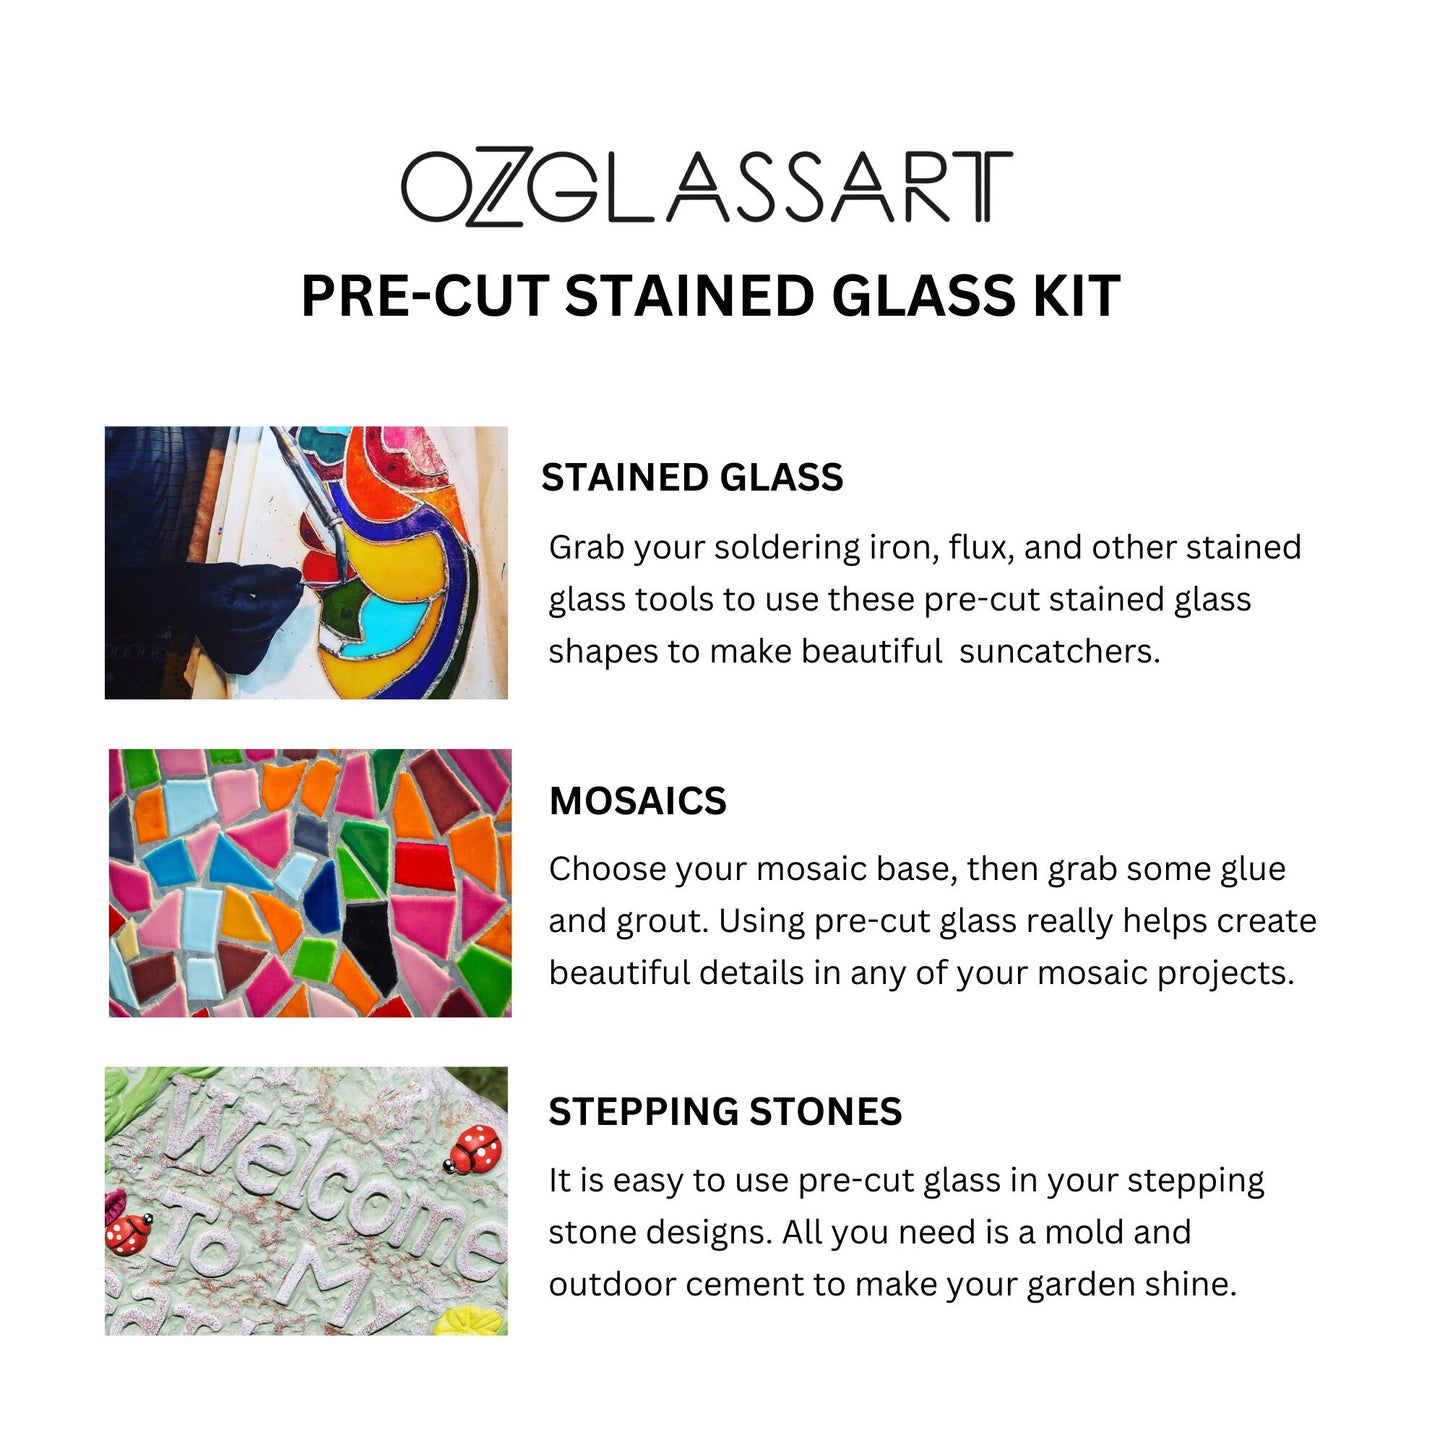 Kit de vidrieras suculentas precortadas - Kit suculento de vidrieras, kit de vidrio precortado - kit de vidrio diy, mosaico, trampolín